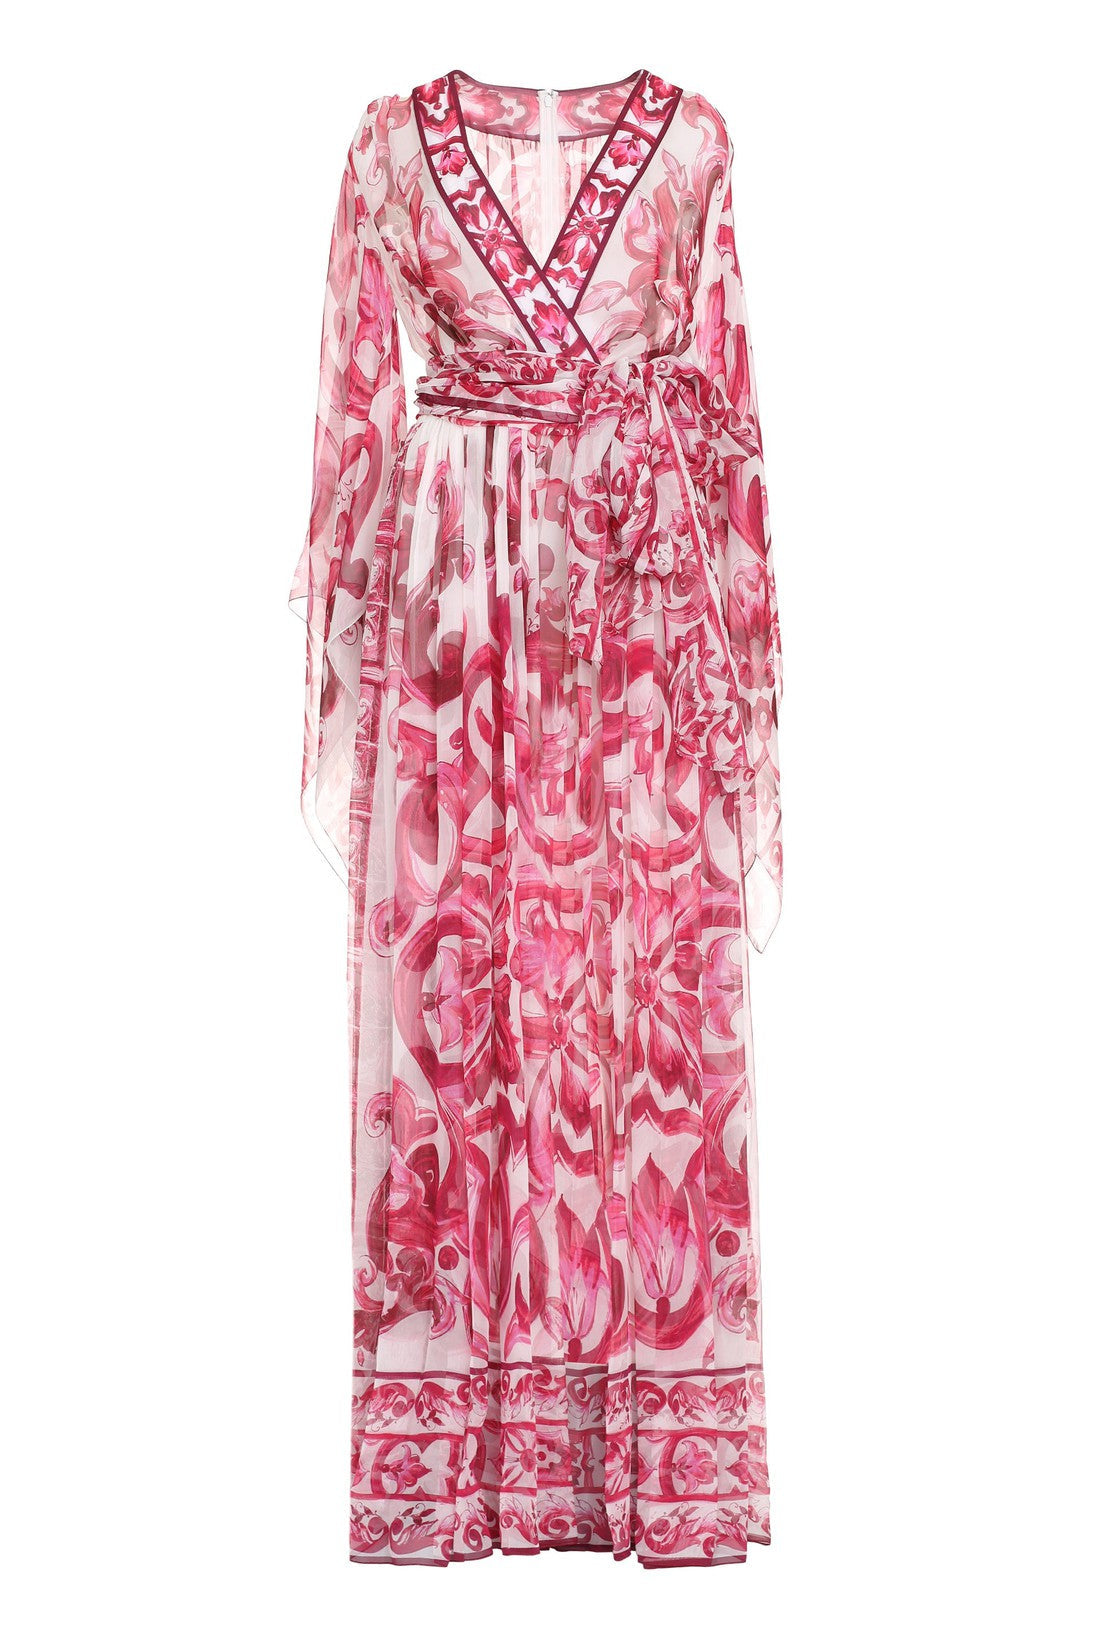 Dolce & Gabbana-OUTLET-SALE-Long chiffon dress-ARCHIVIST